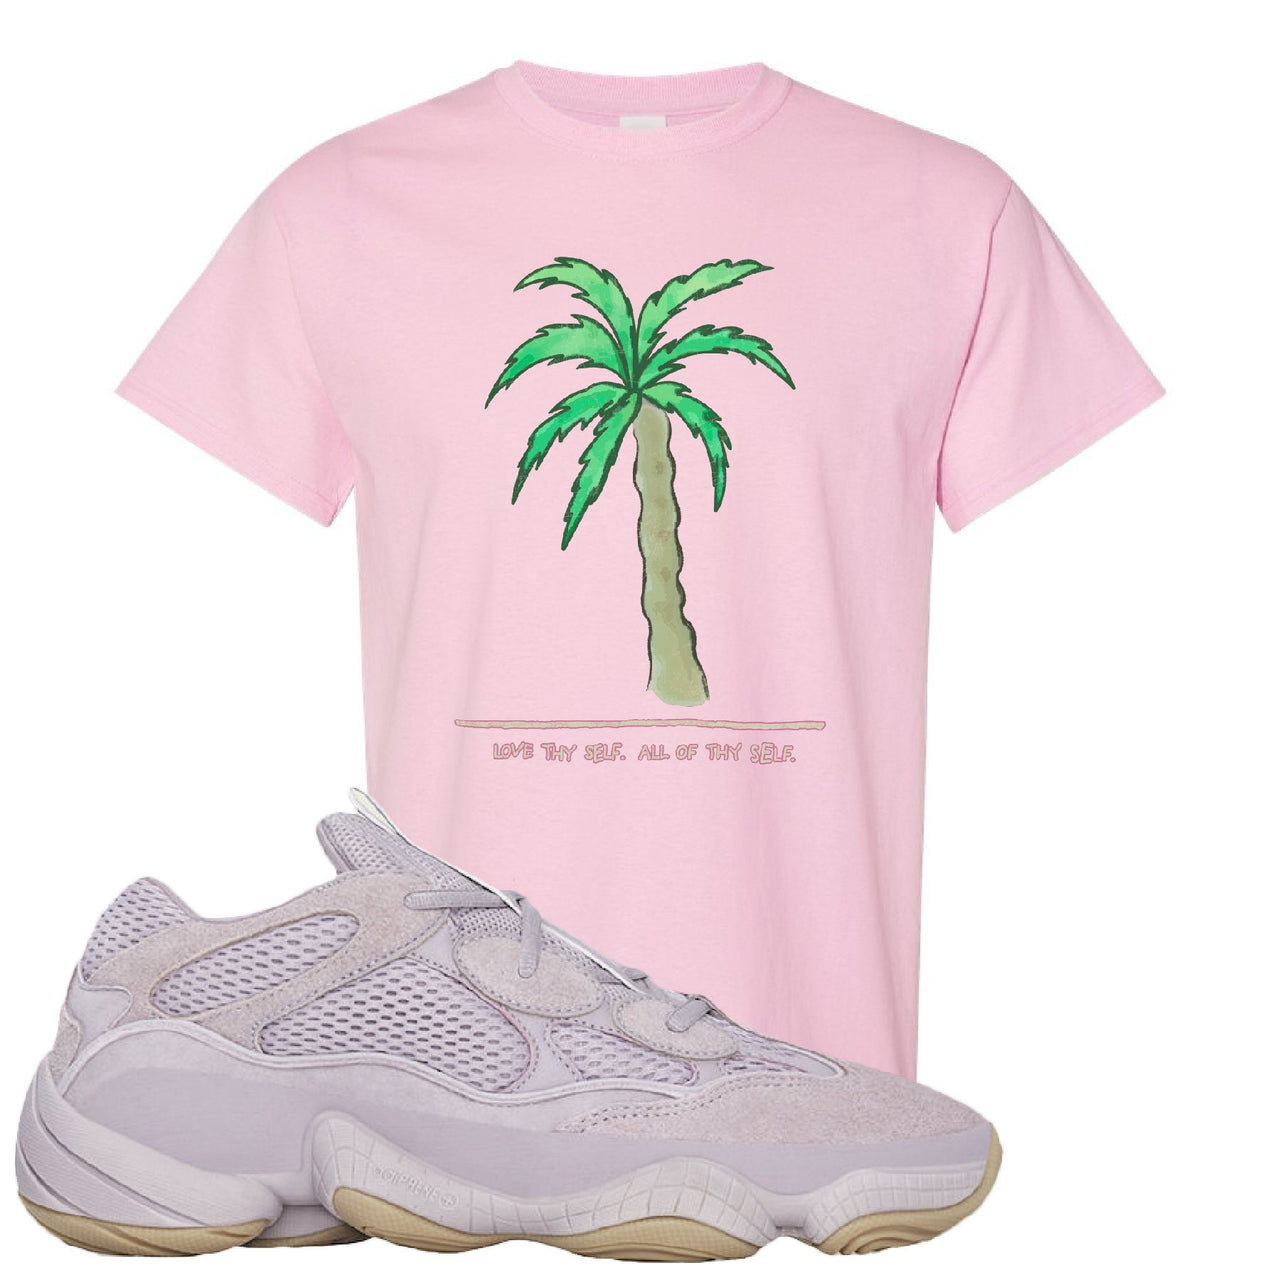 Yeezy 500 Soft Vision Love Thyself Palm Light Pink Sneaker Hook Up T-Shirt